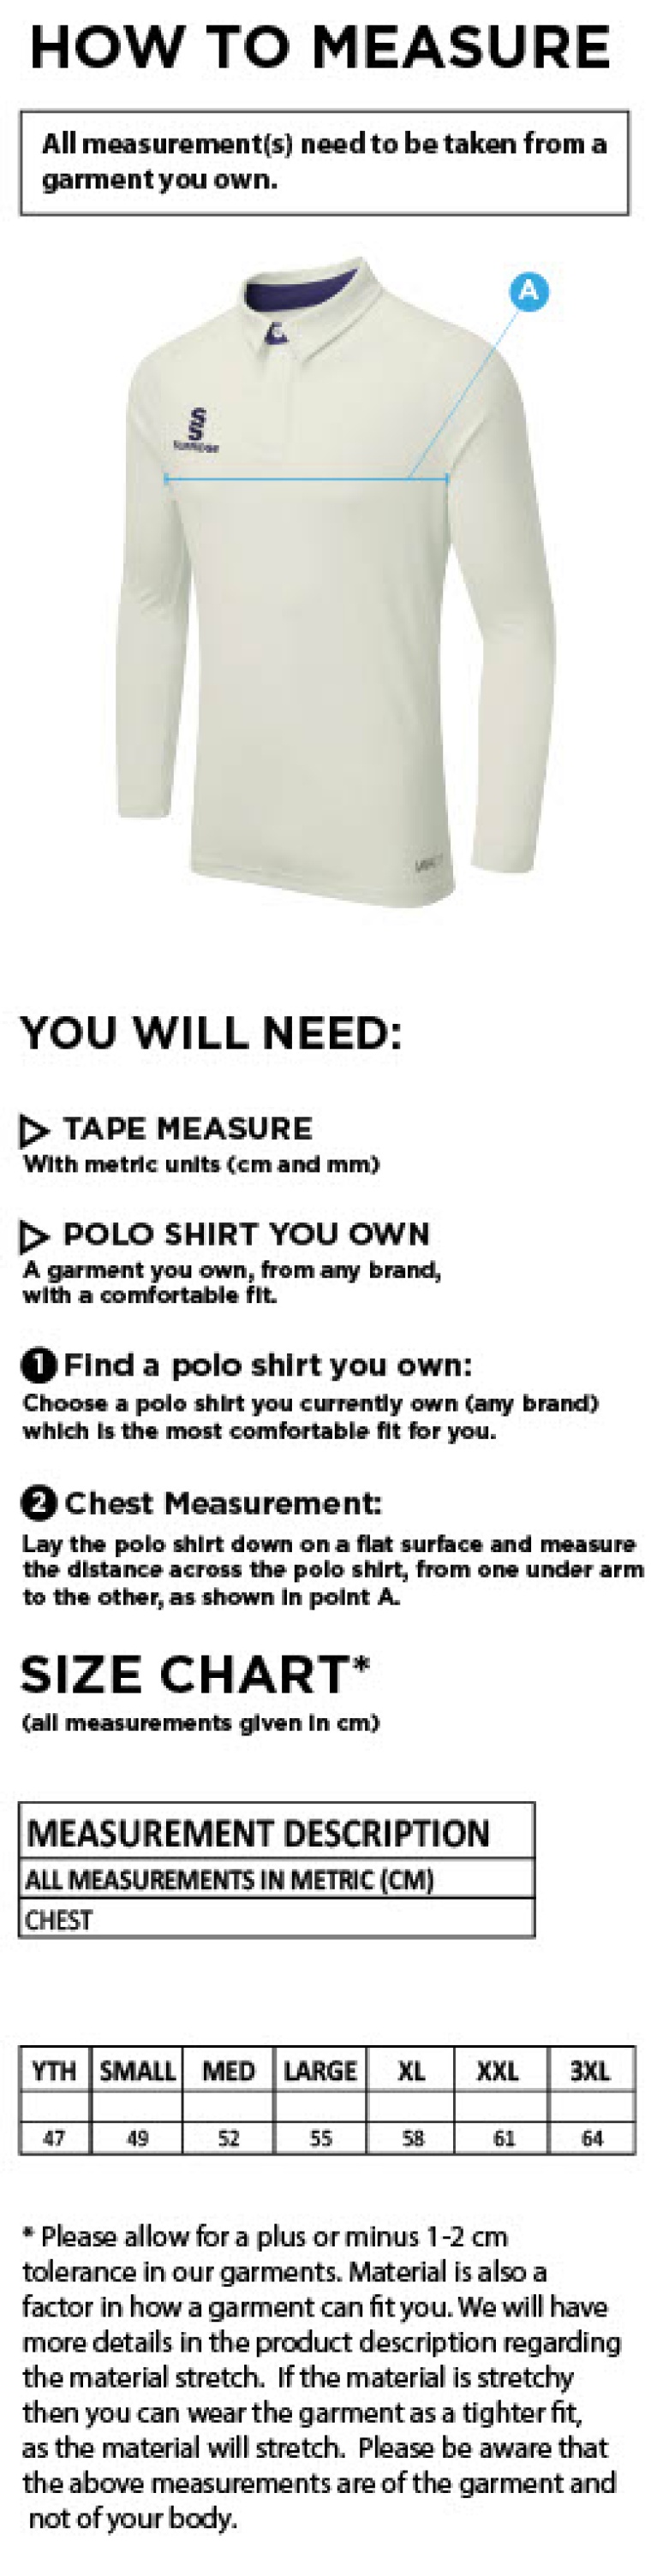 Shepley CC - Ergo Long Sleeve Shirt - Junior - Size Guide